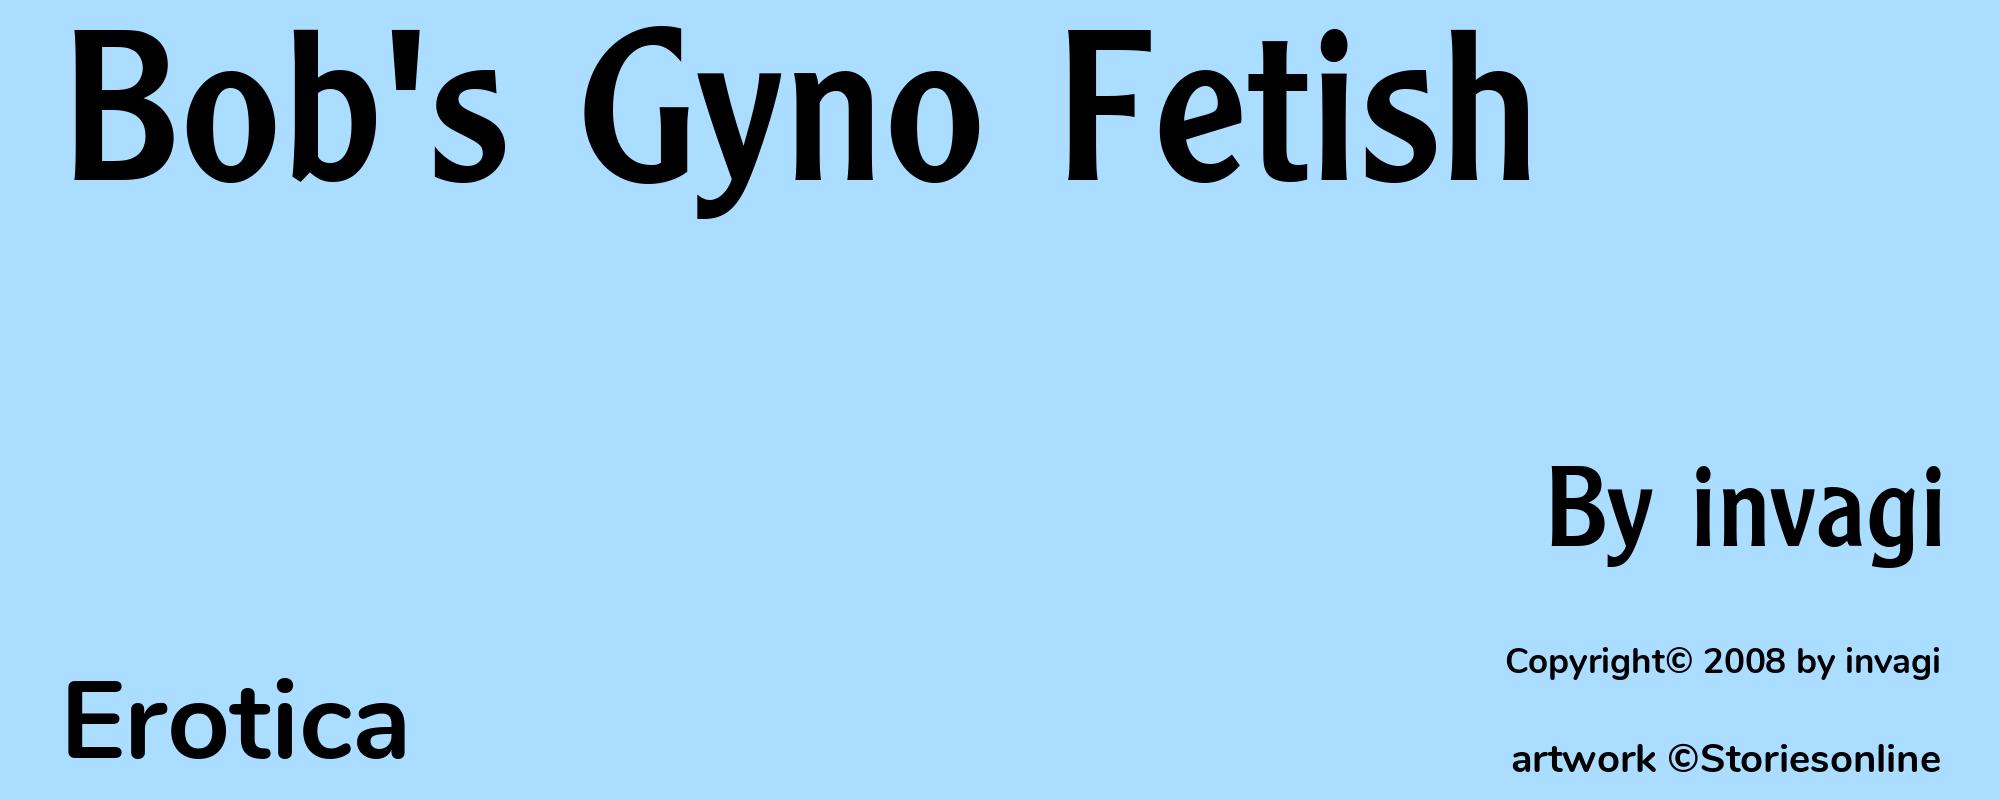 Bob's Gyno Fetish - Cover